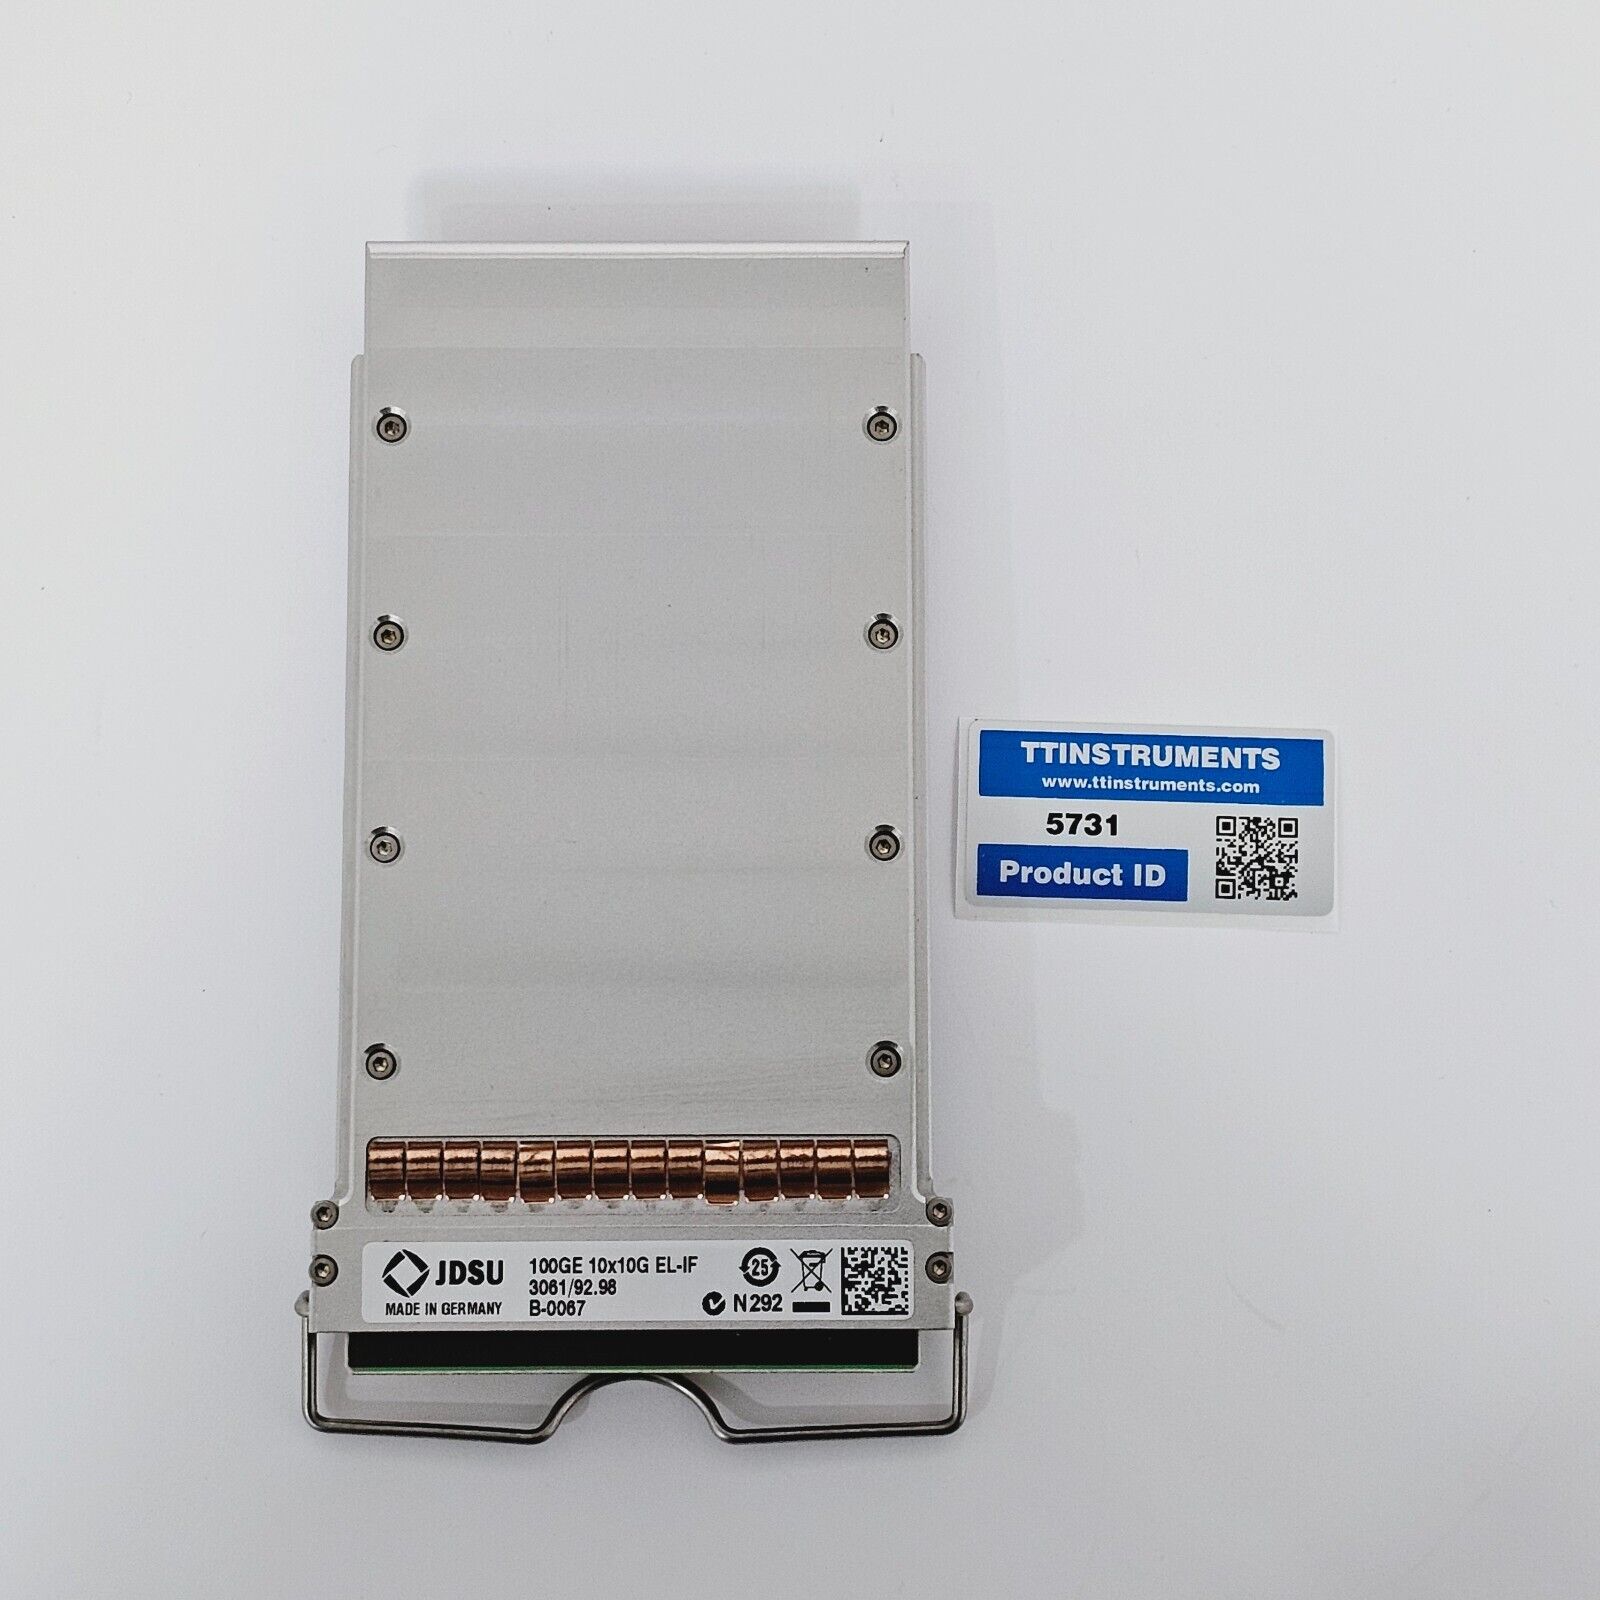 Viavi JDSU 100GE 10x10G Electrical CFP Interface EL-IF 3061/92.98